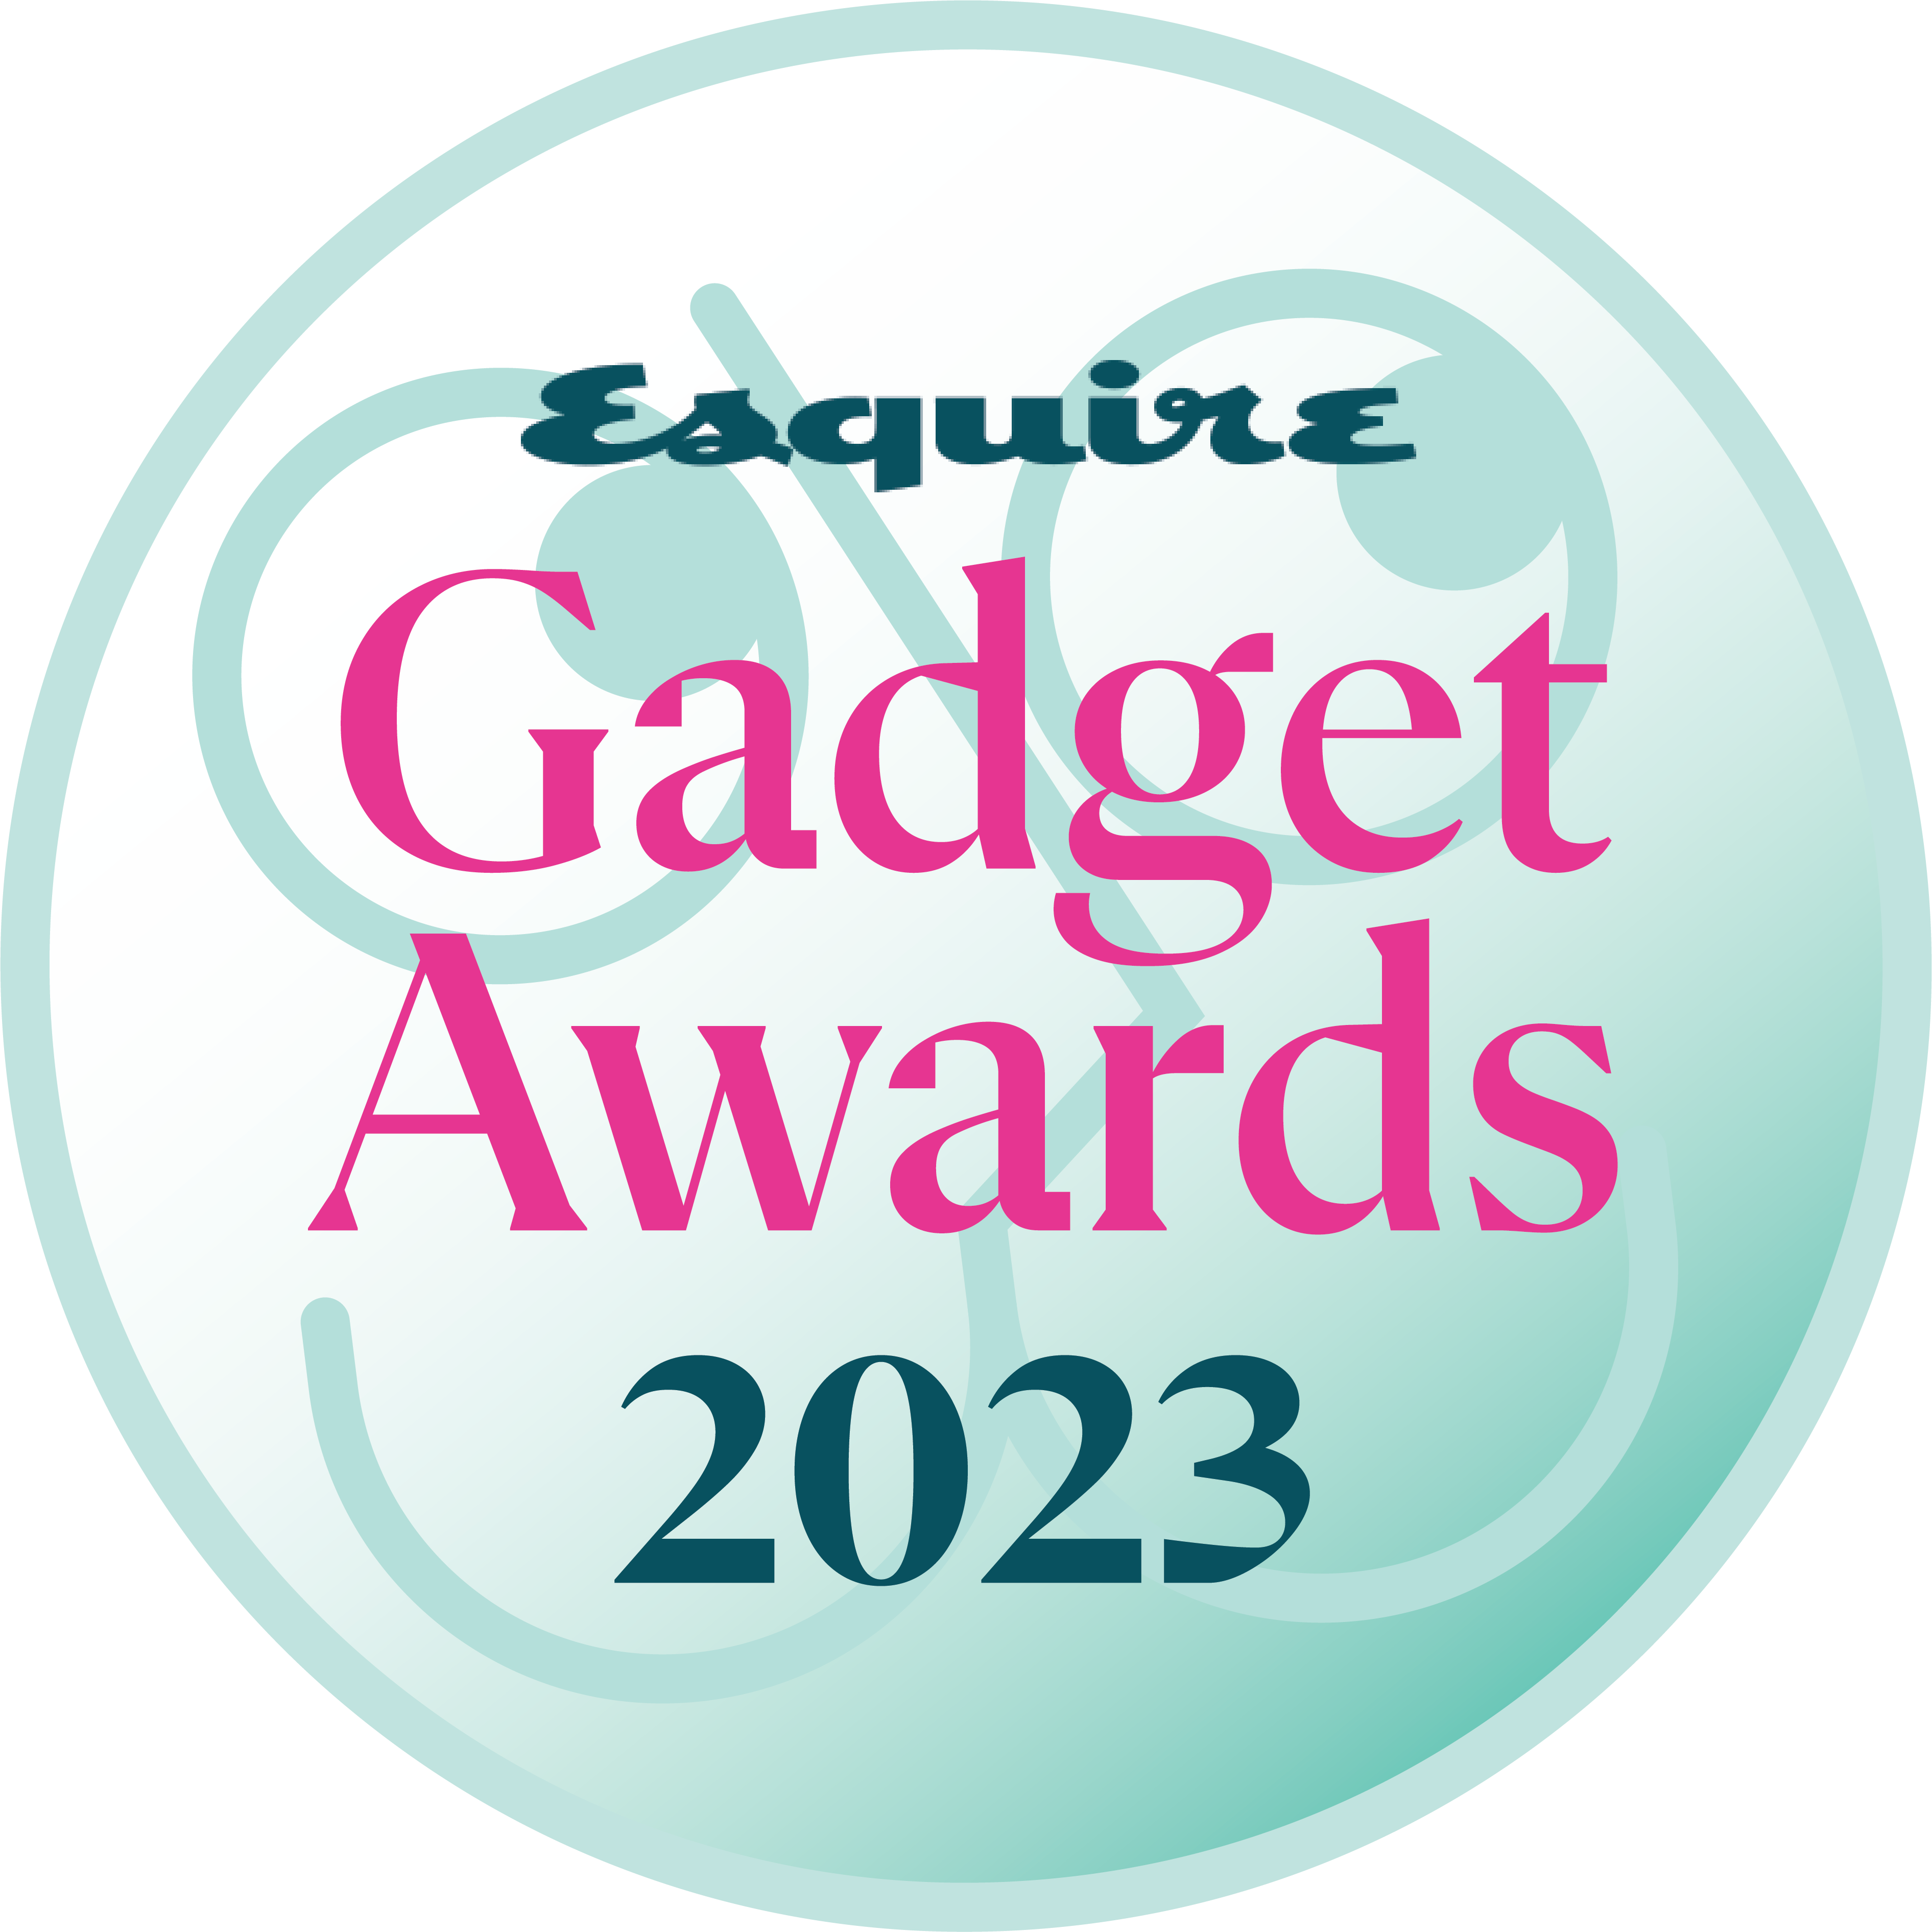 50 Cool Gadgets for Men 2020 - Esquire Gadget Awards